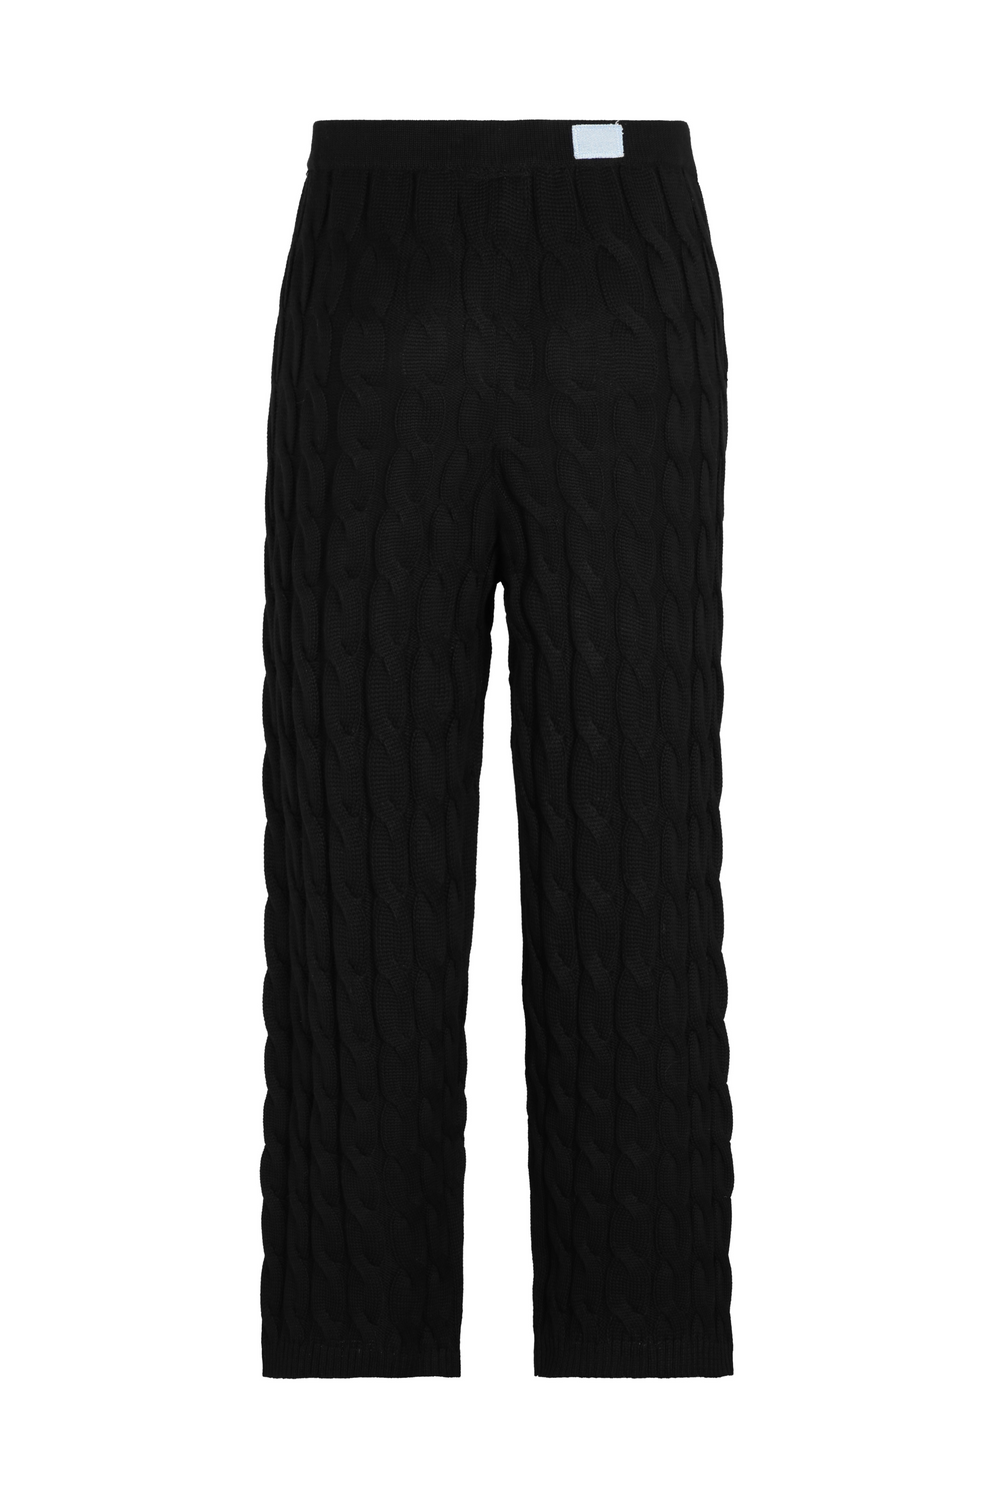 Black Cable Knit Pants Reuben Oliver